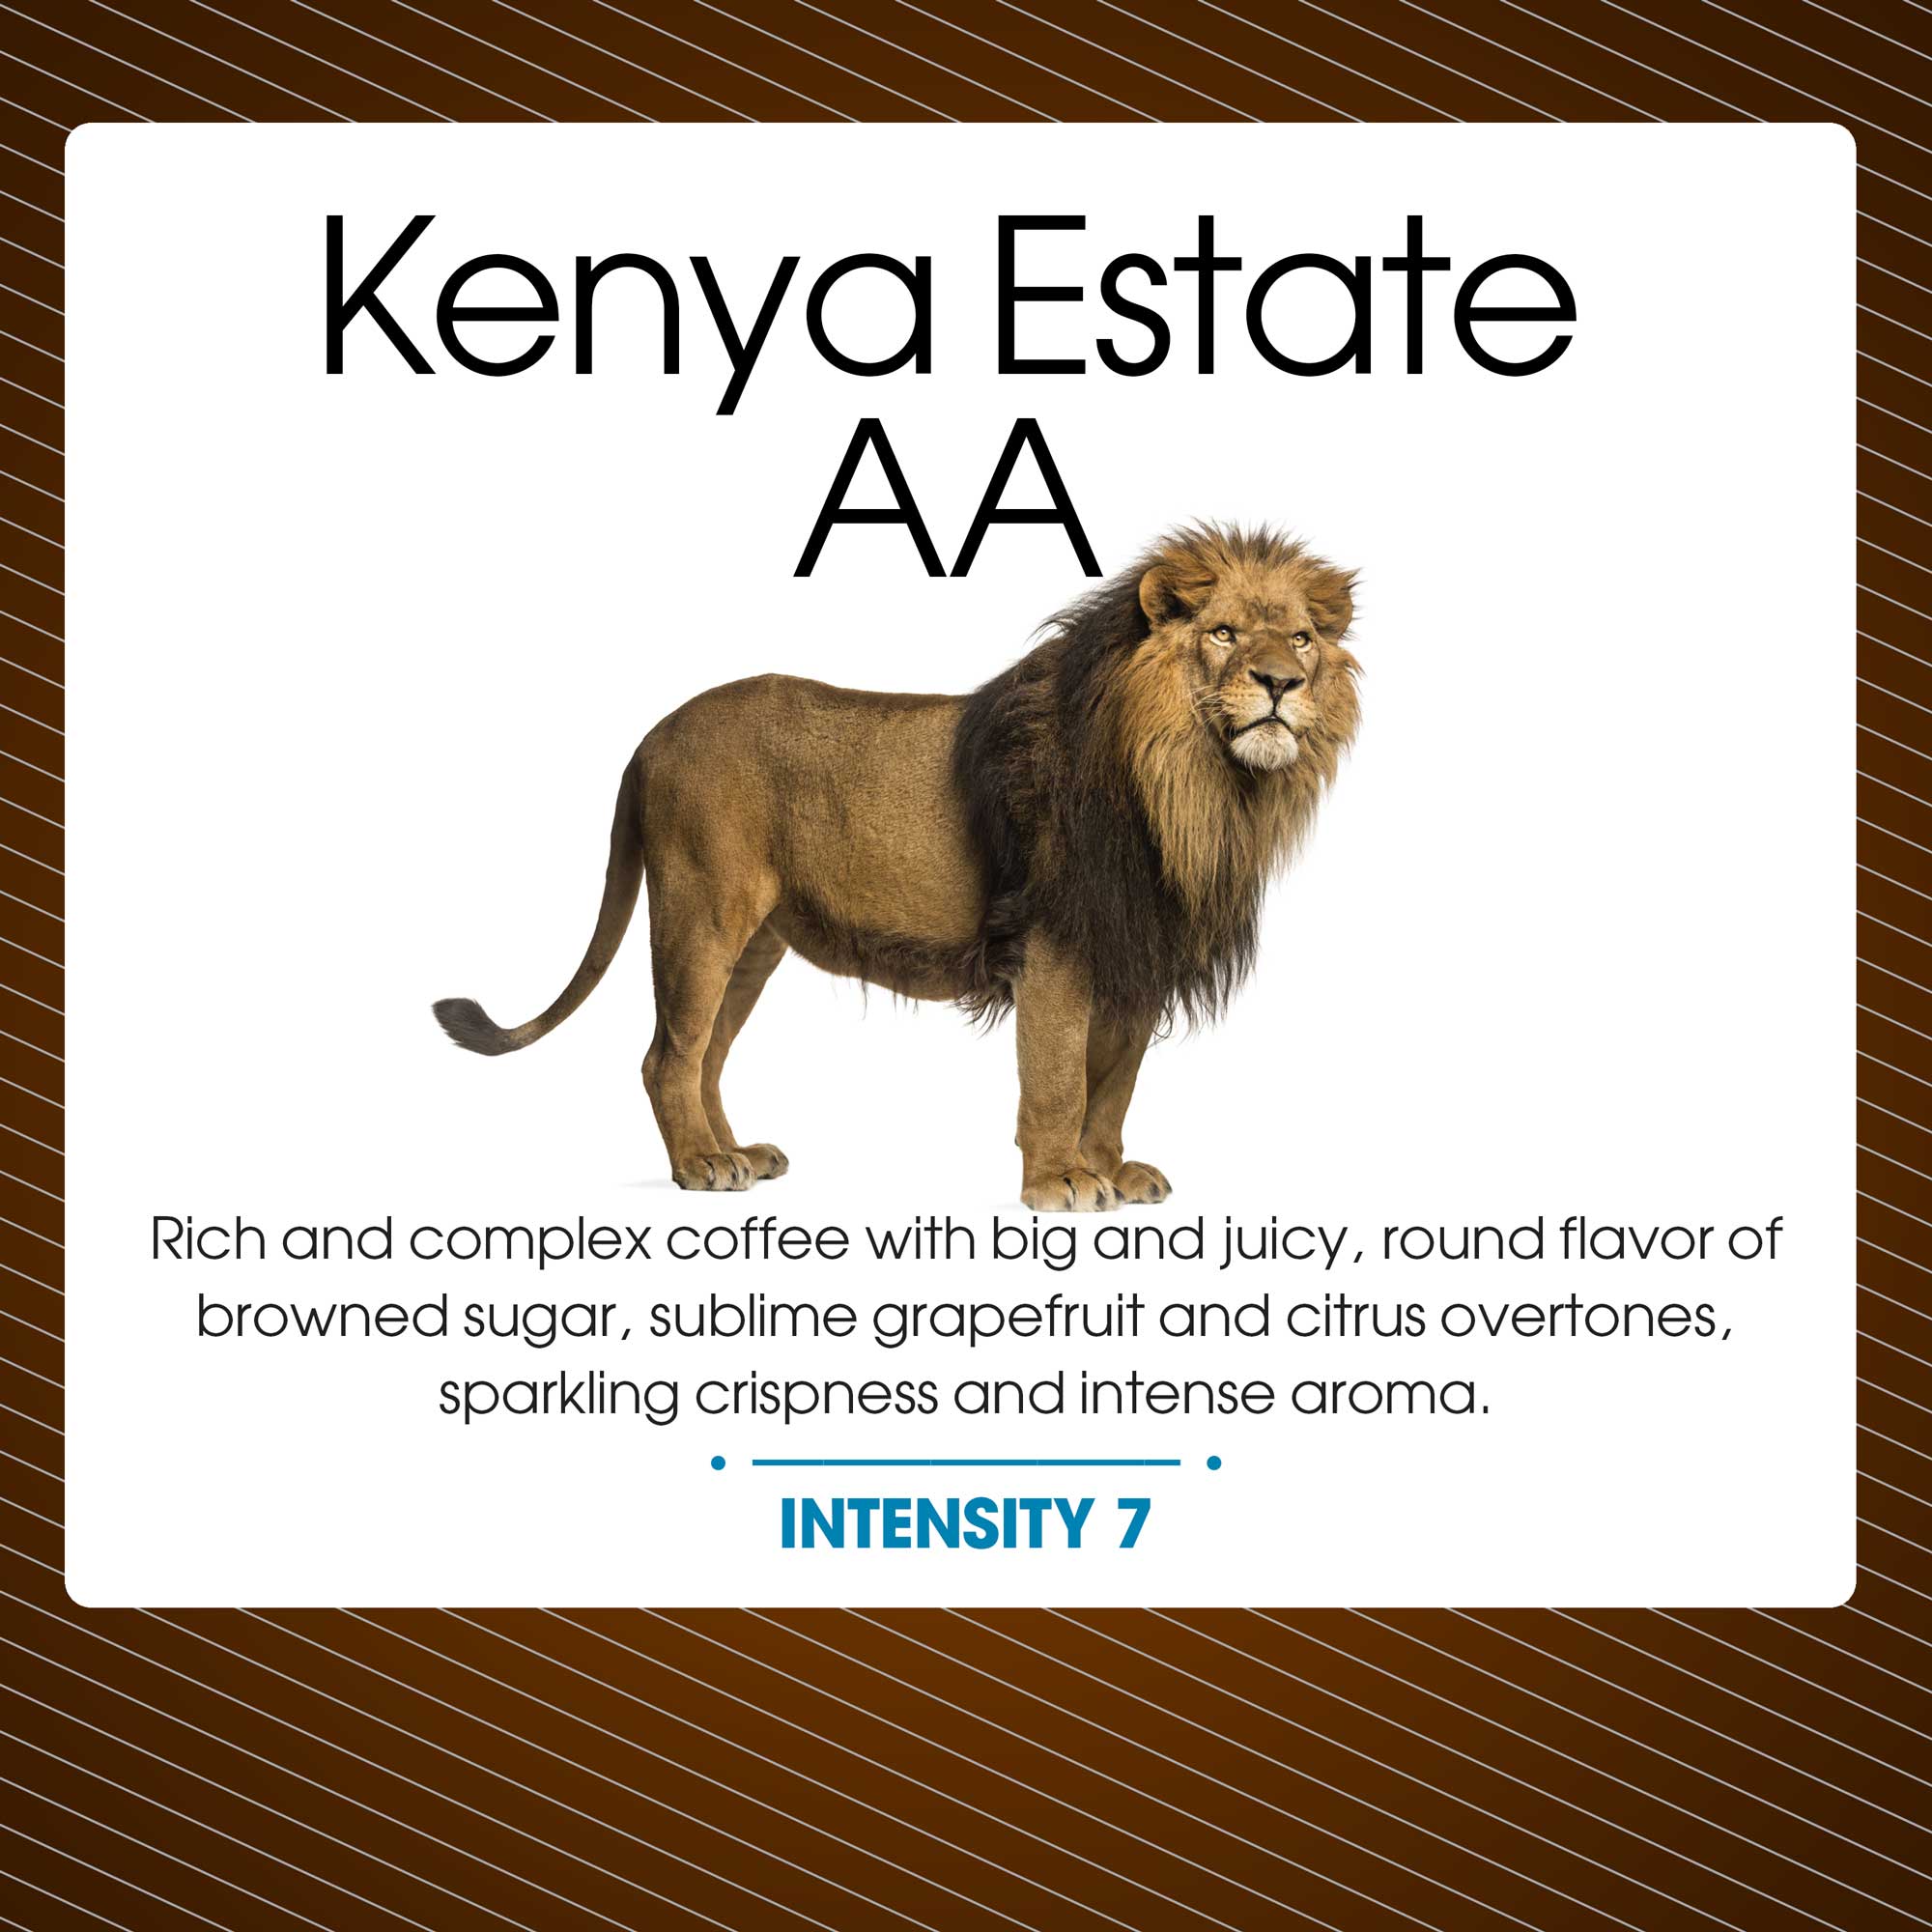 Kenya Estate AA